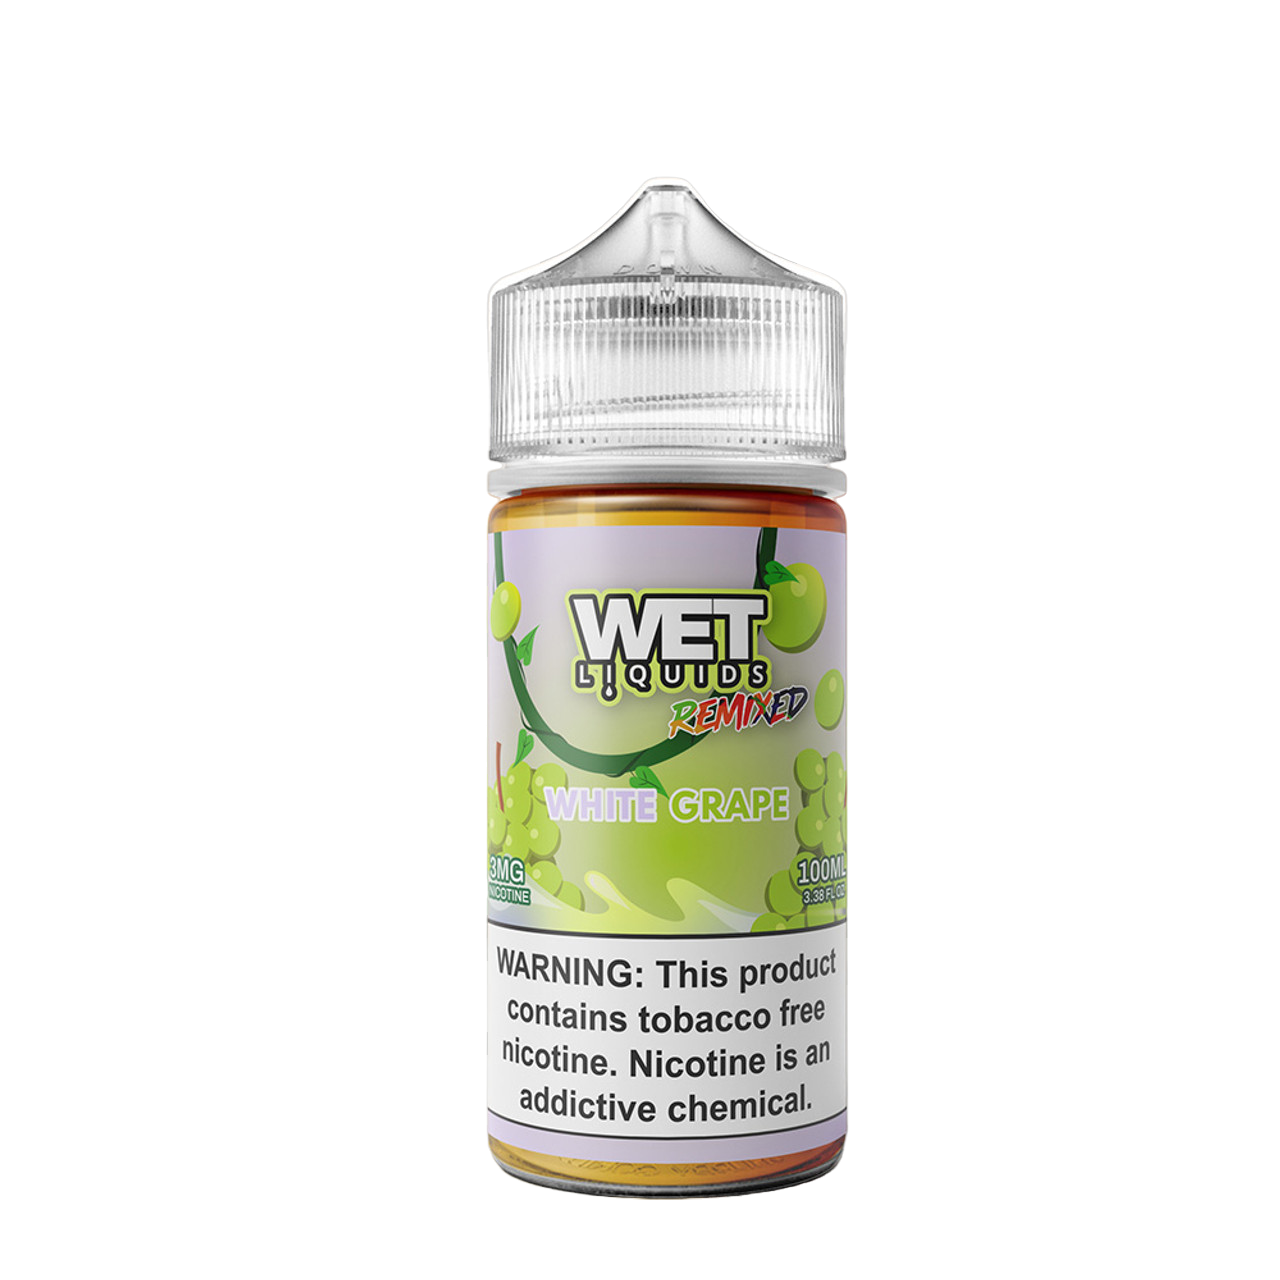 Wet Liquids Remixed Synthetic Nicotine E-Liquid 100ML White Grape